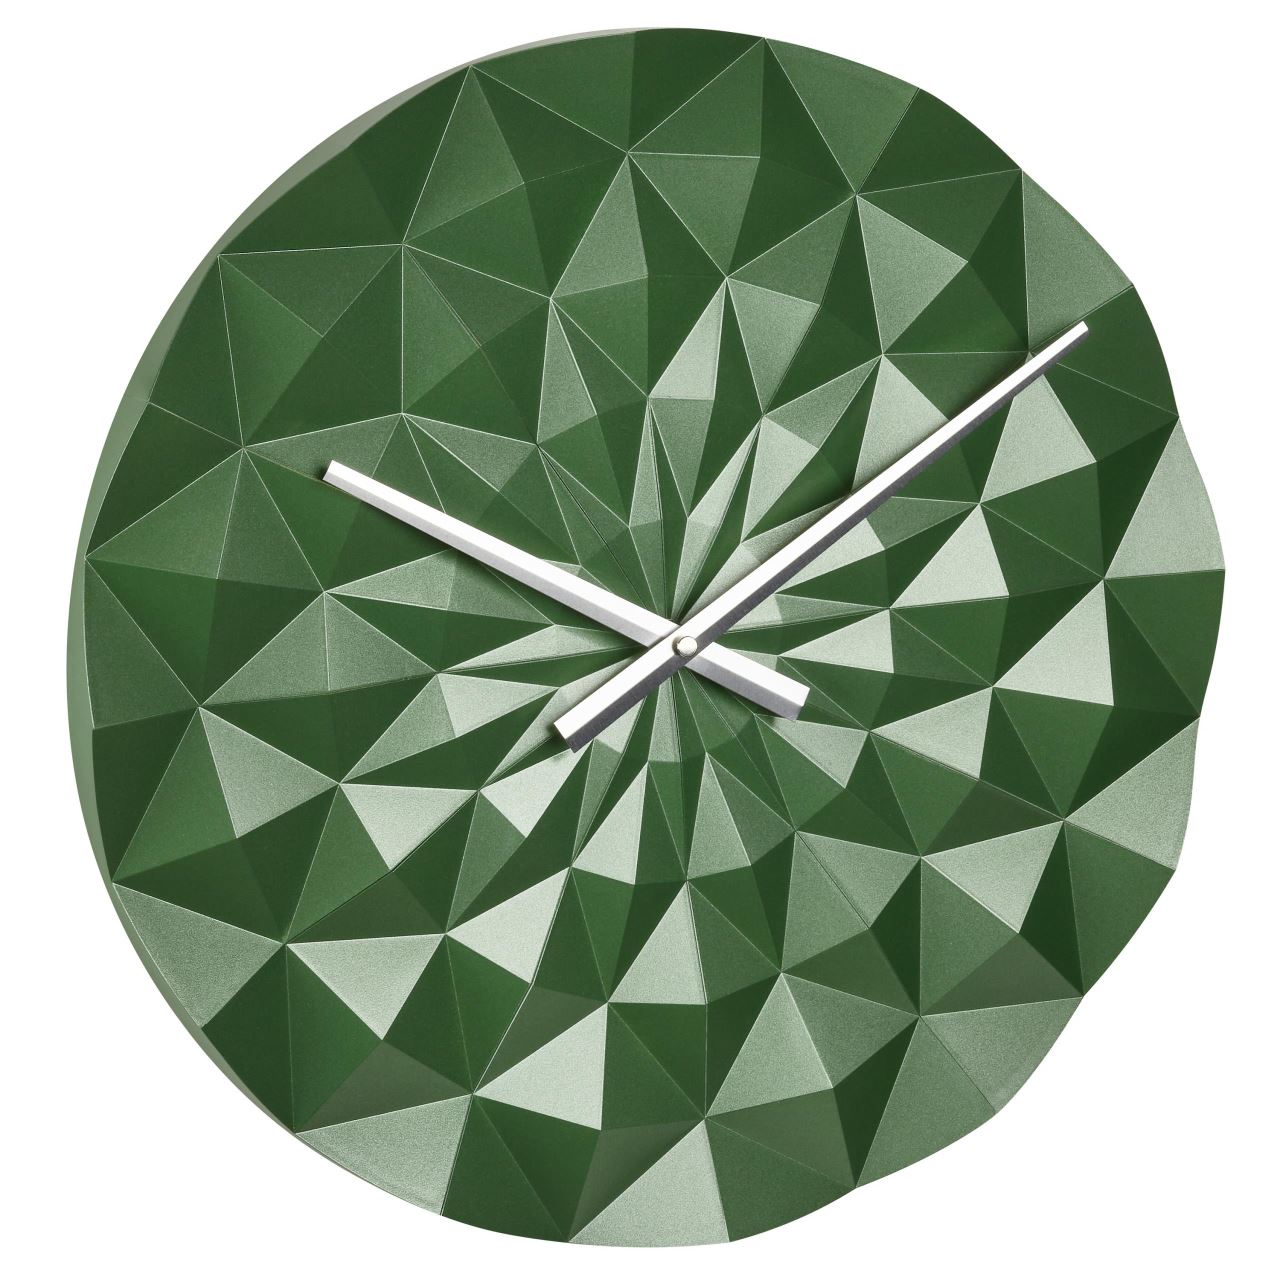 Ceas geometric de precizie, analog, de perete, creat de designer, model diamond, verde metalic, tfa 60.3063.04 bekid.ro